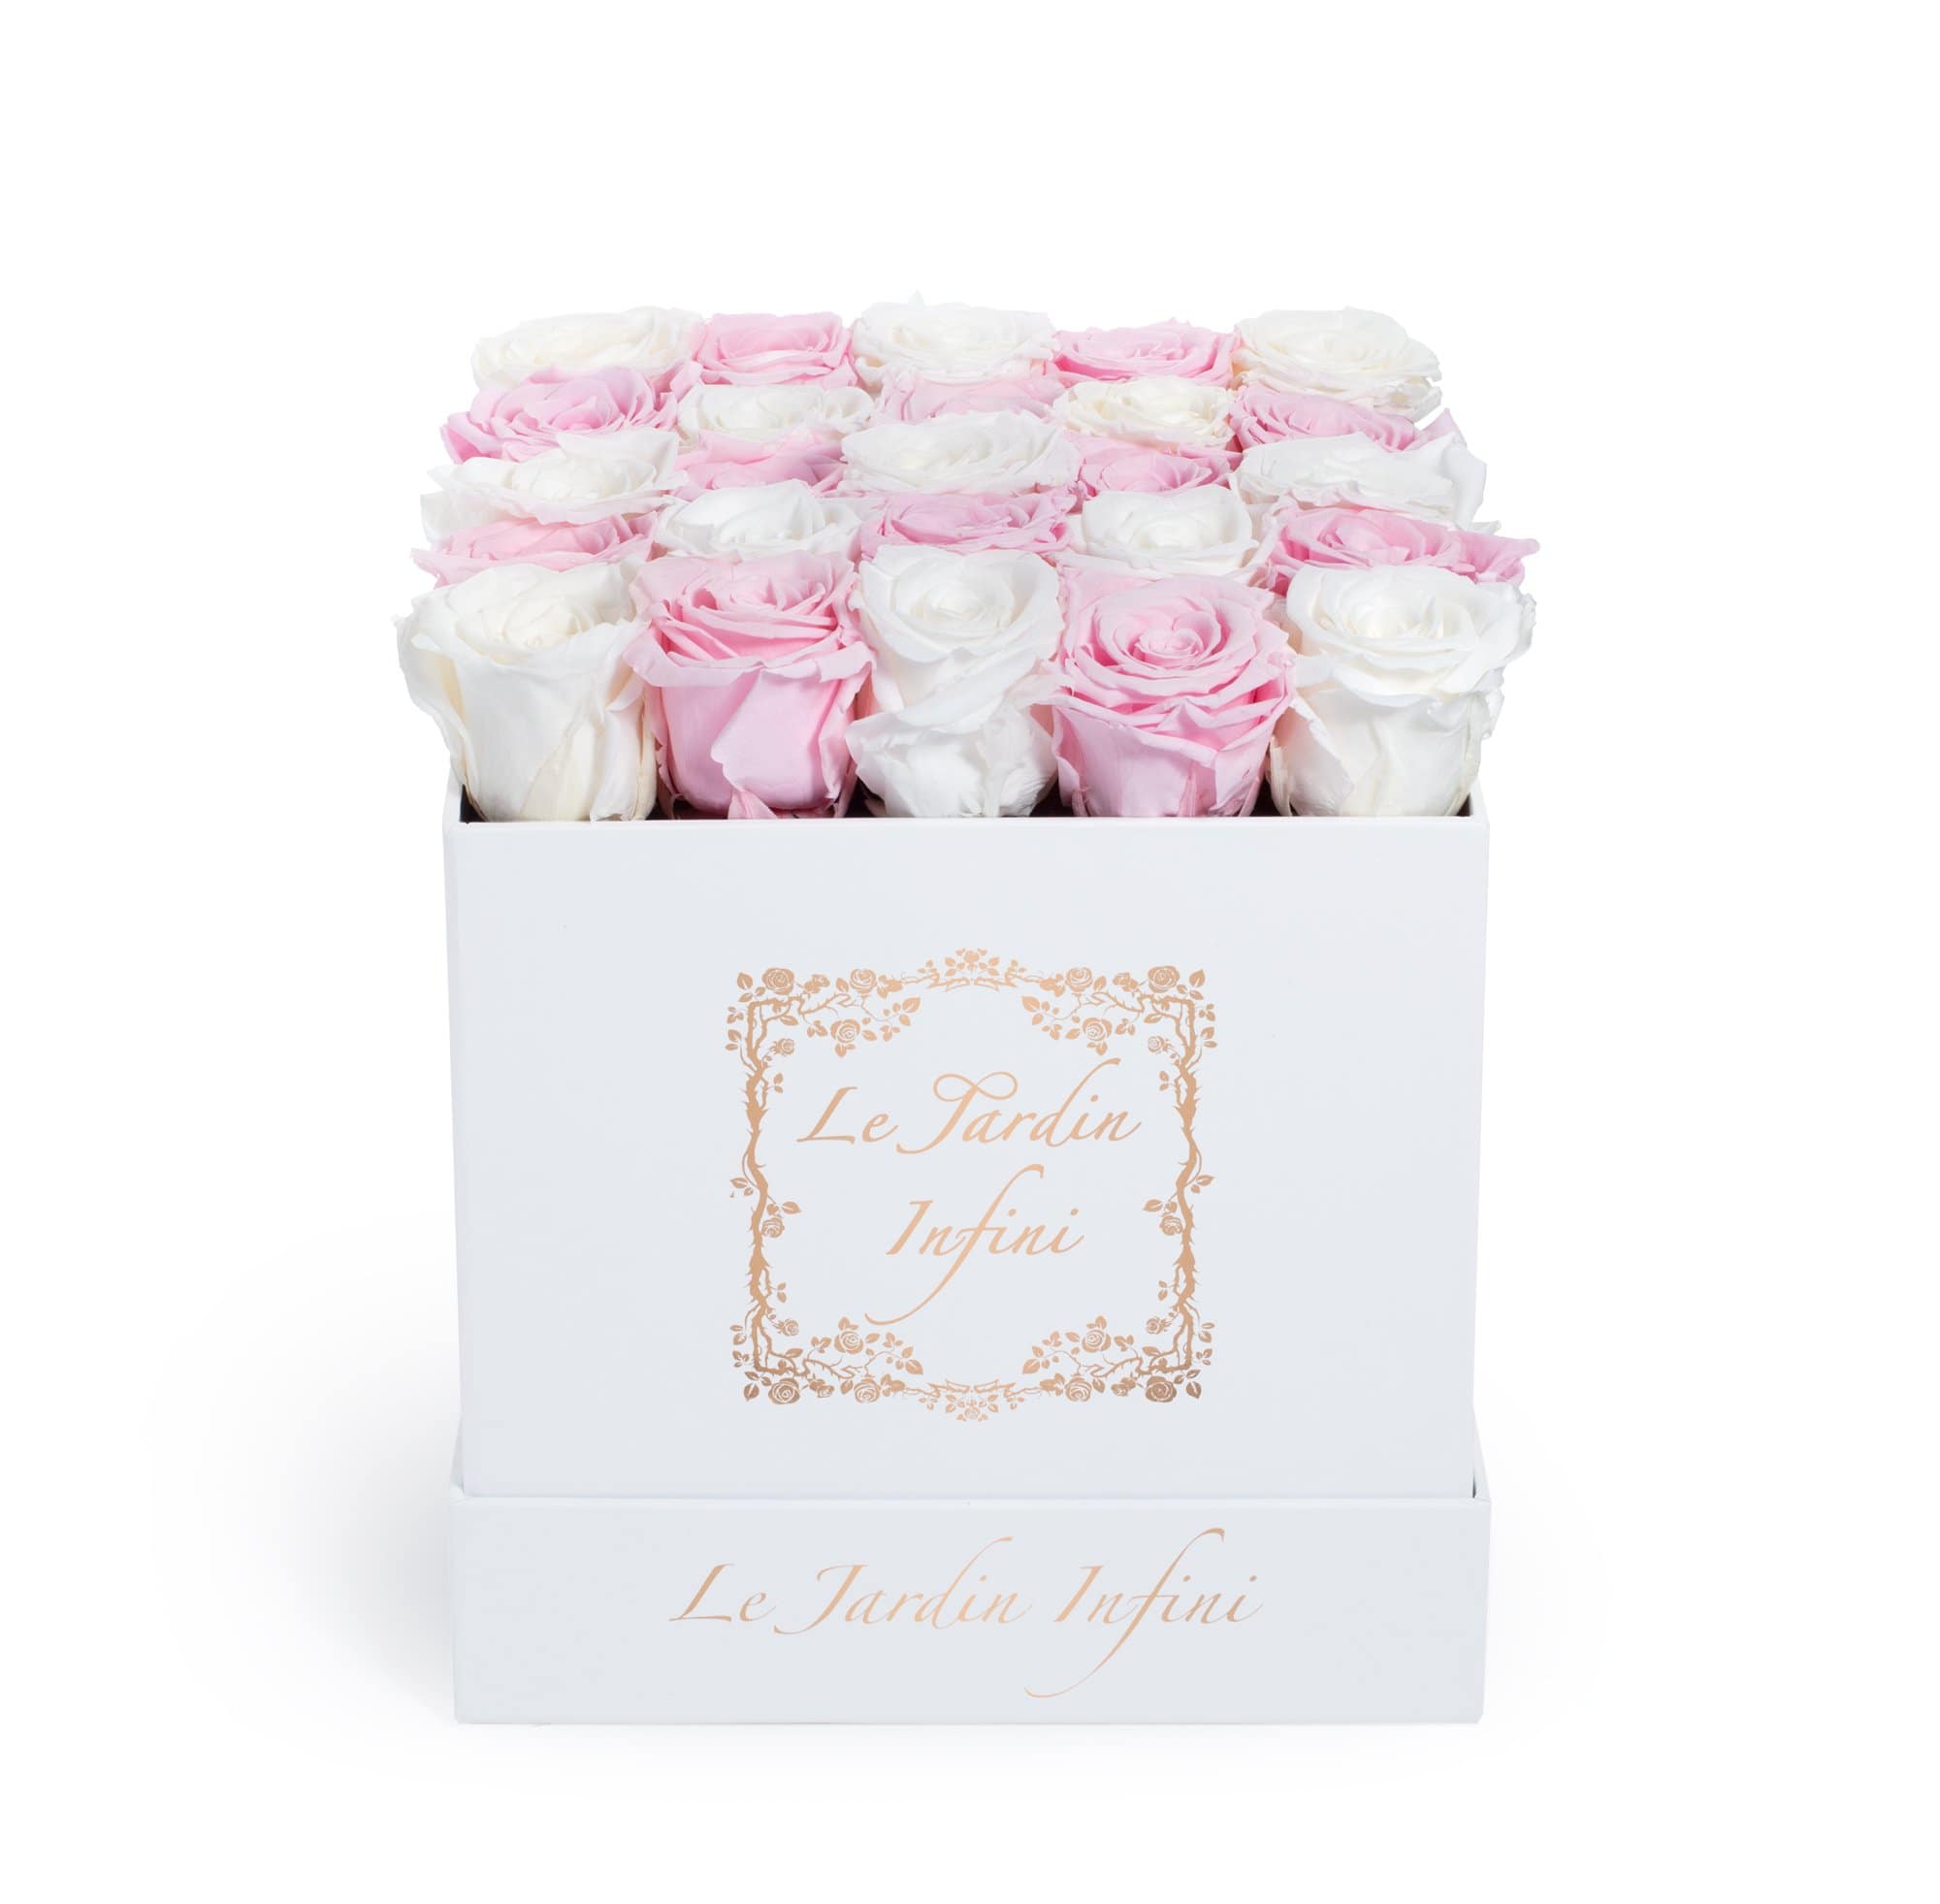 Checker White & Soft Pink Preserved Roses - Medium Square White Box - Le Jardin Infini Roses in a Box